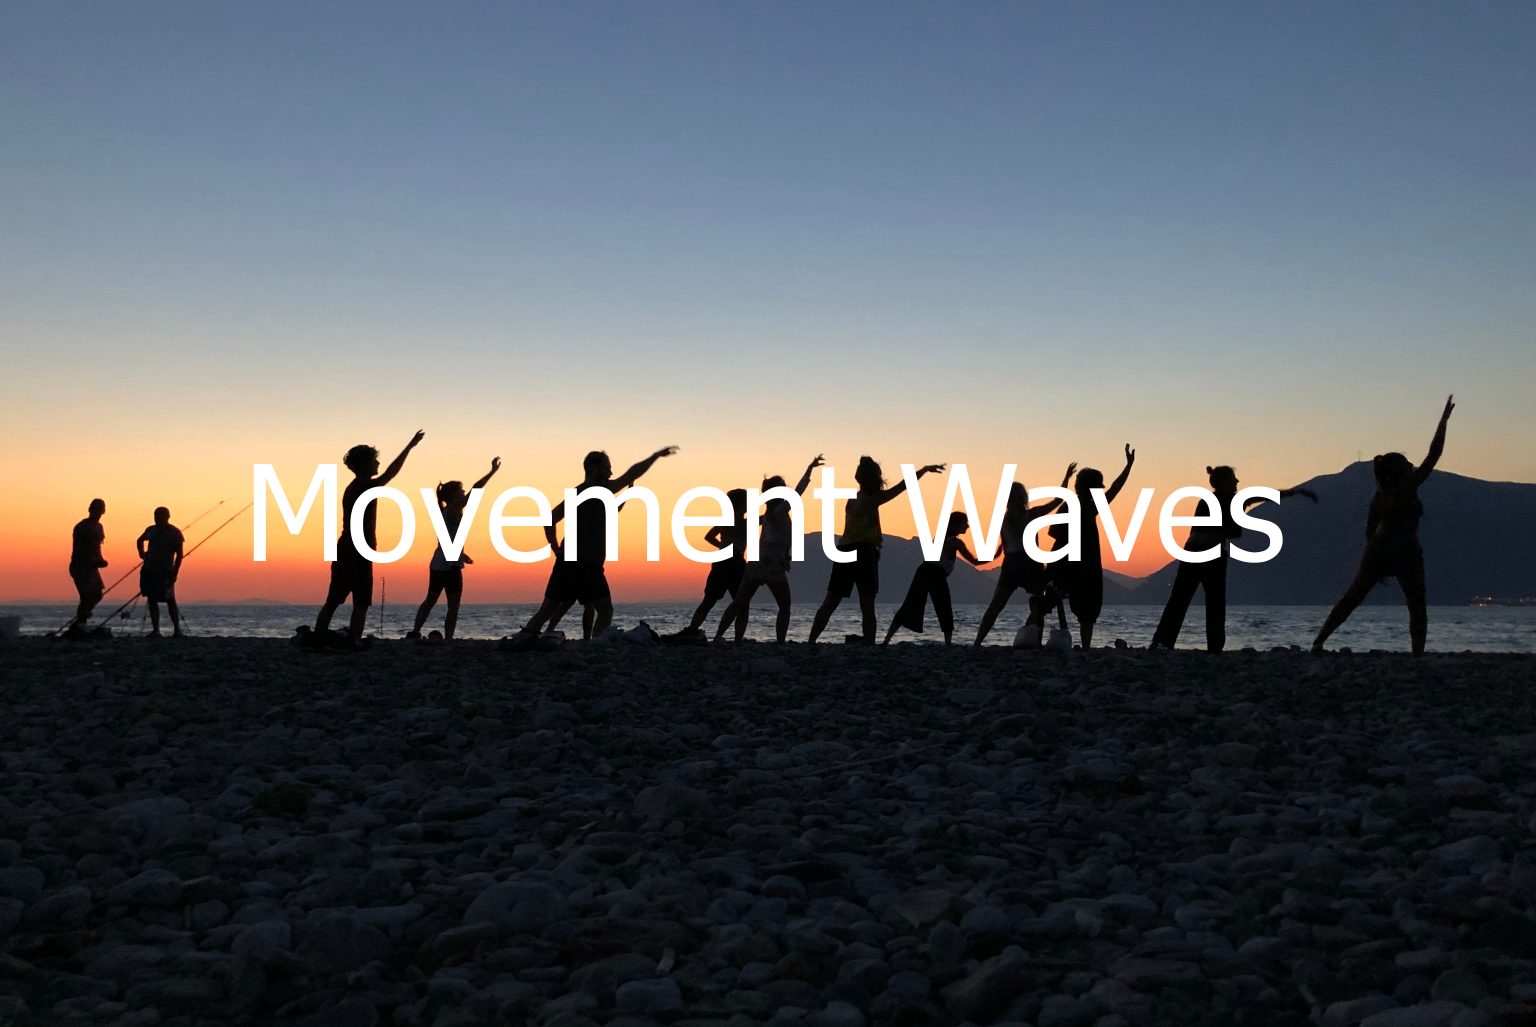 Movement waves